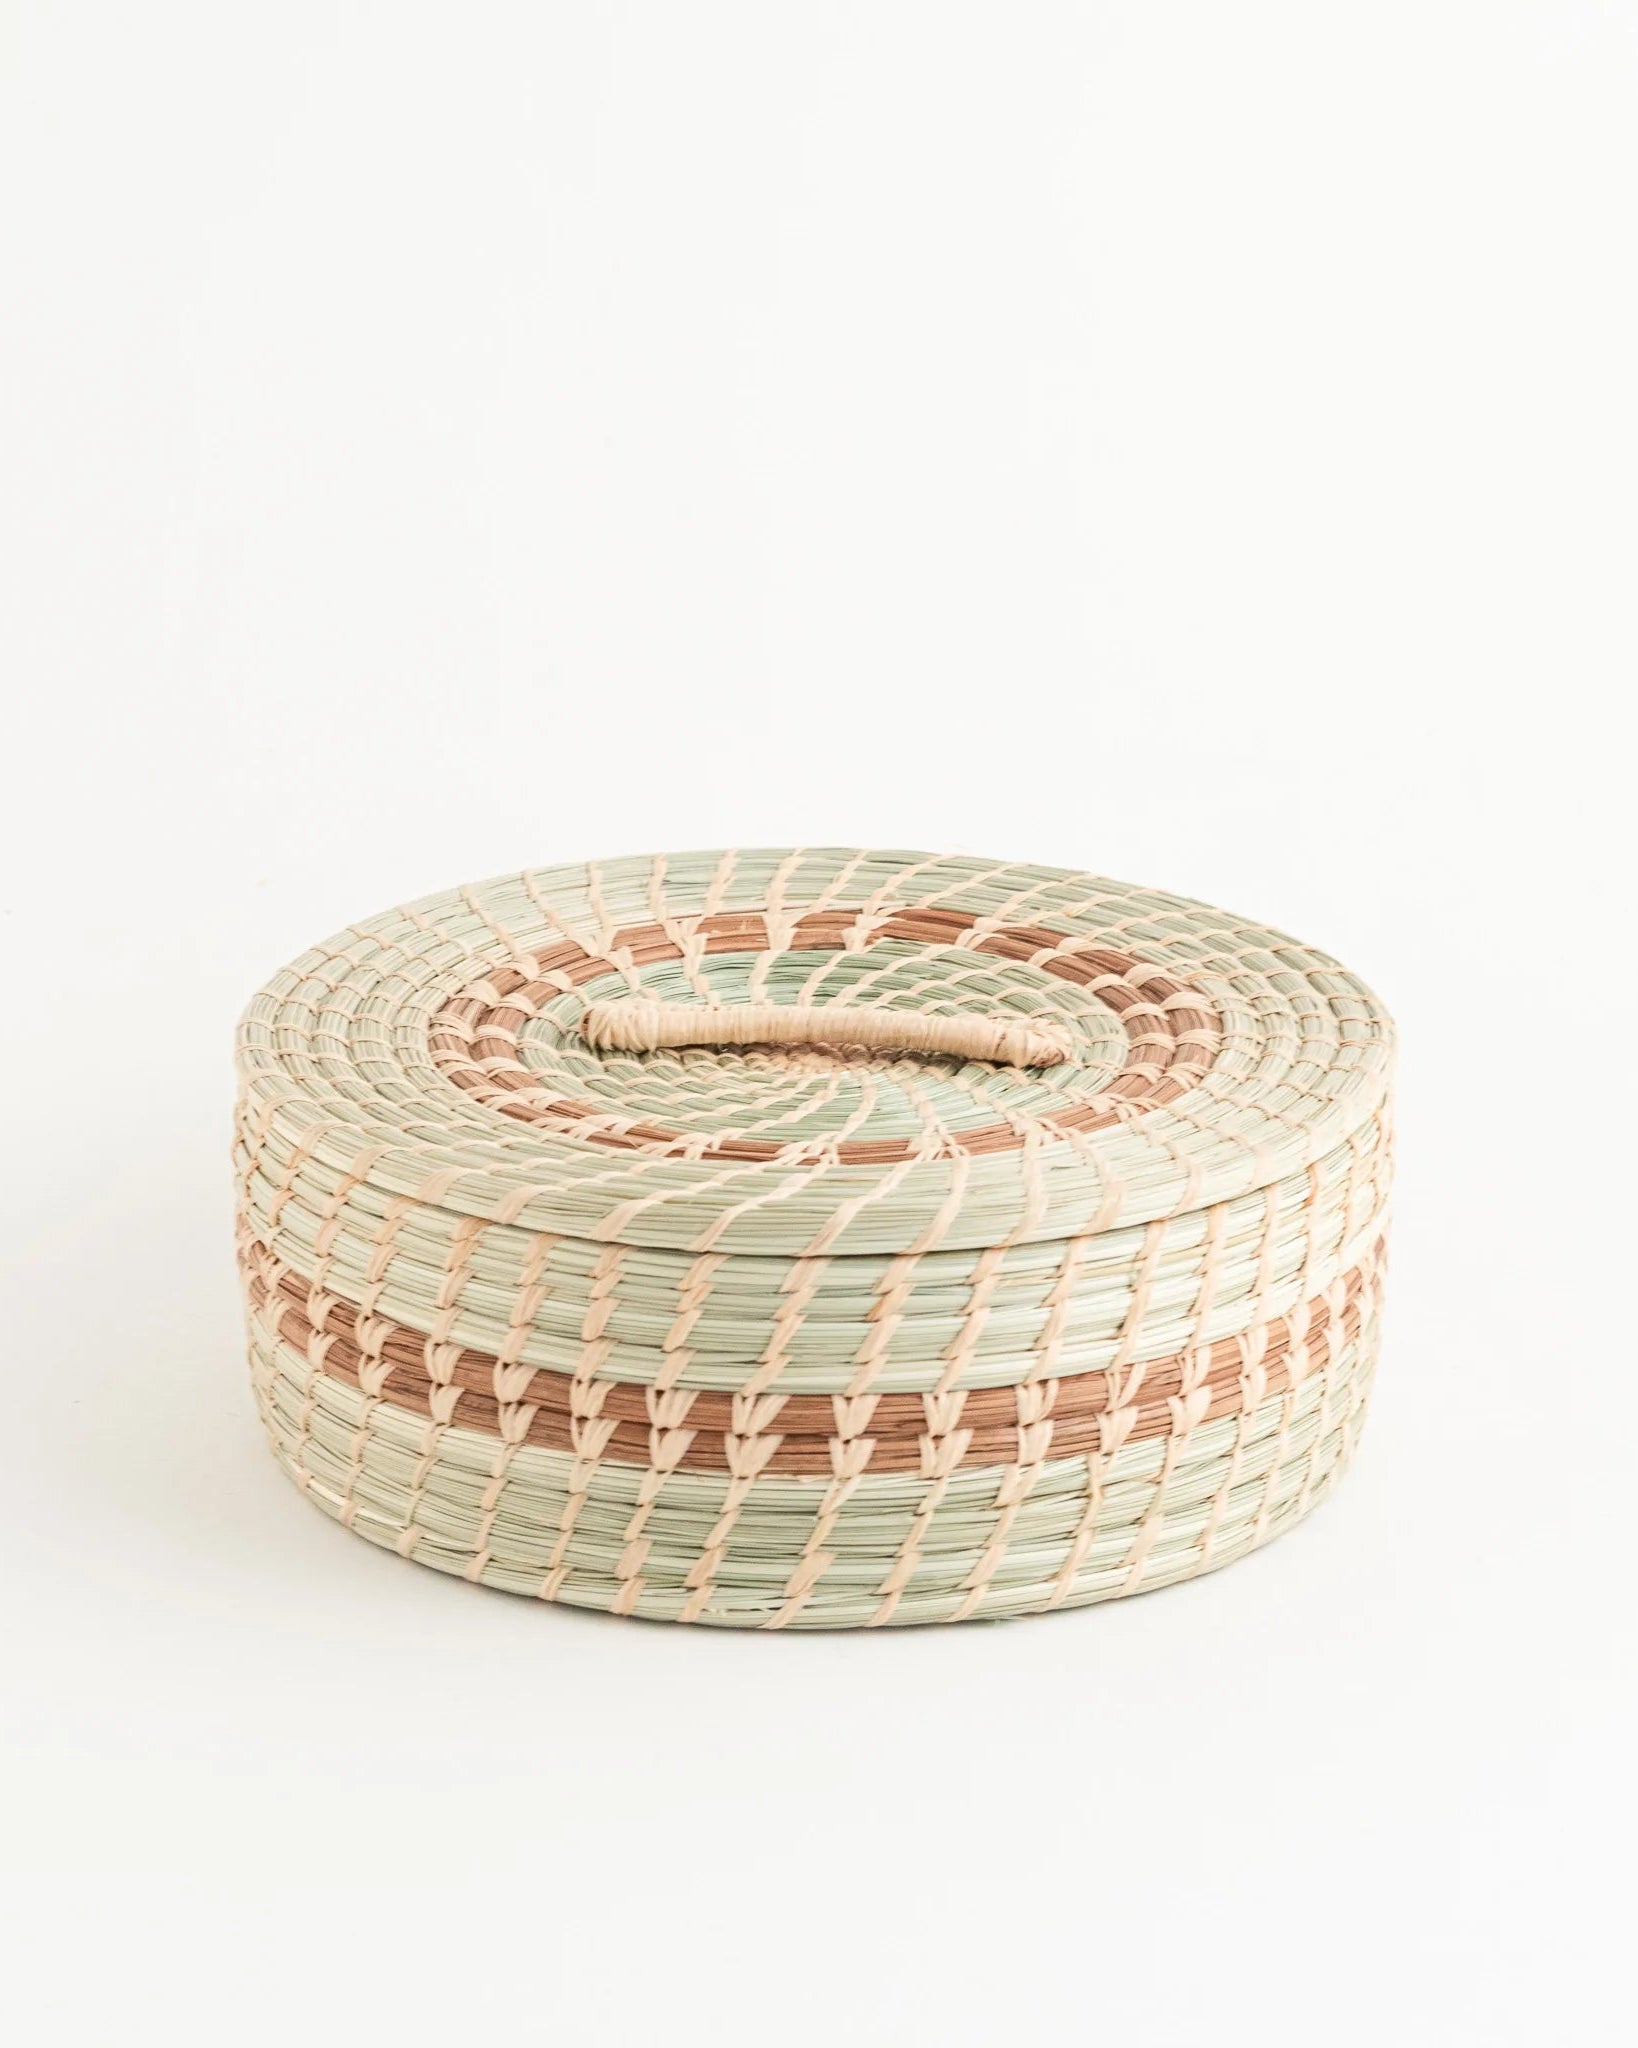 Wild Grass and Pine Tortilla Basket with Lid - Tesoros Maya